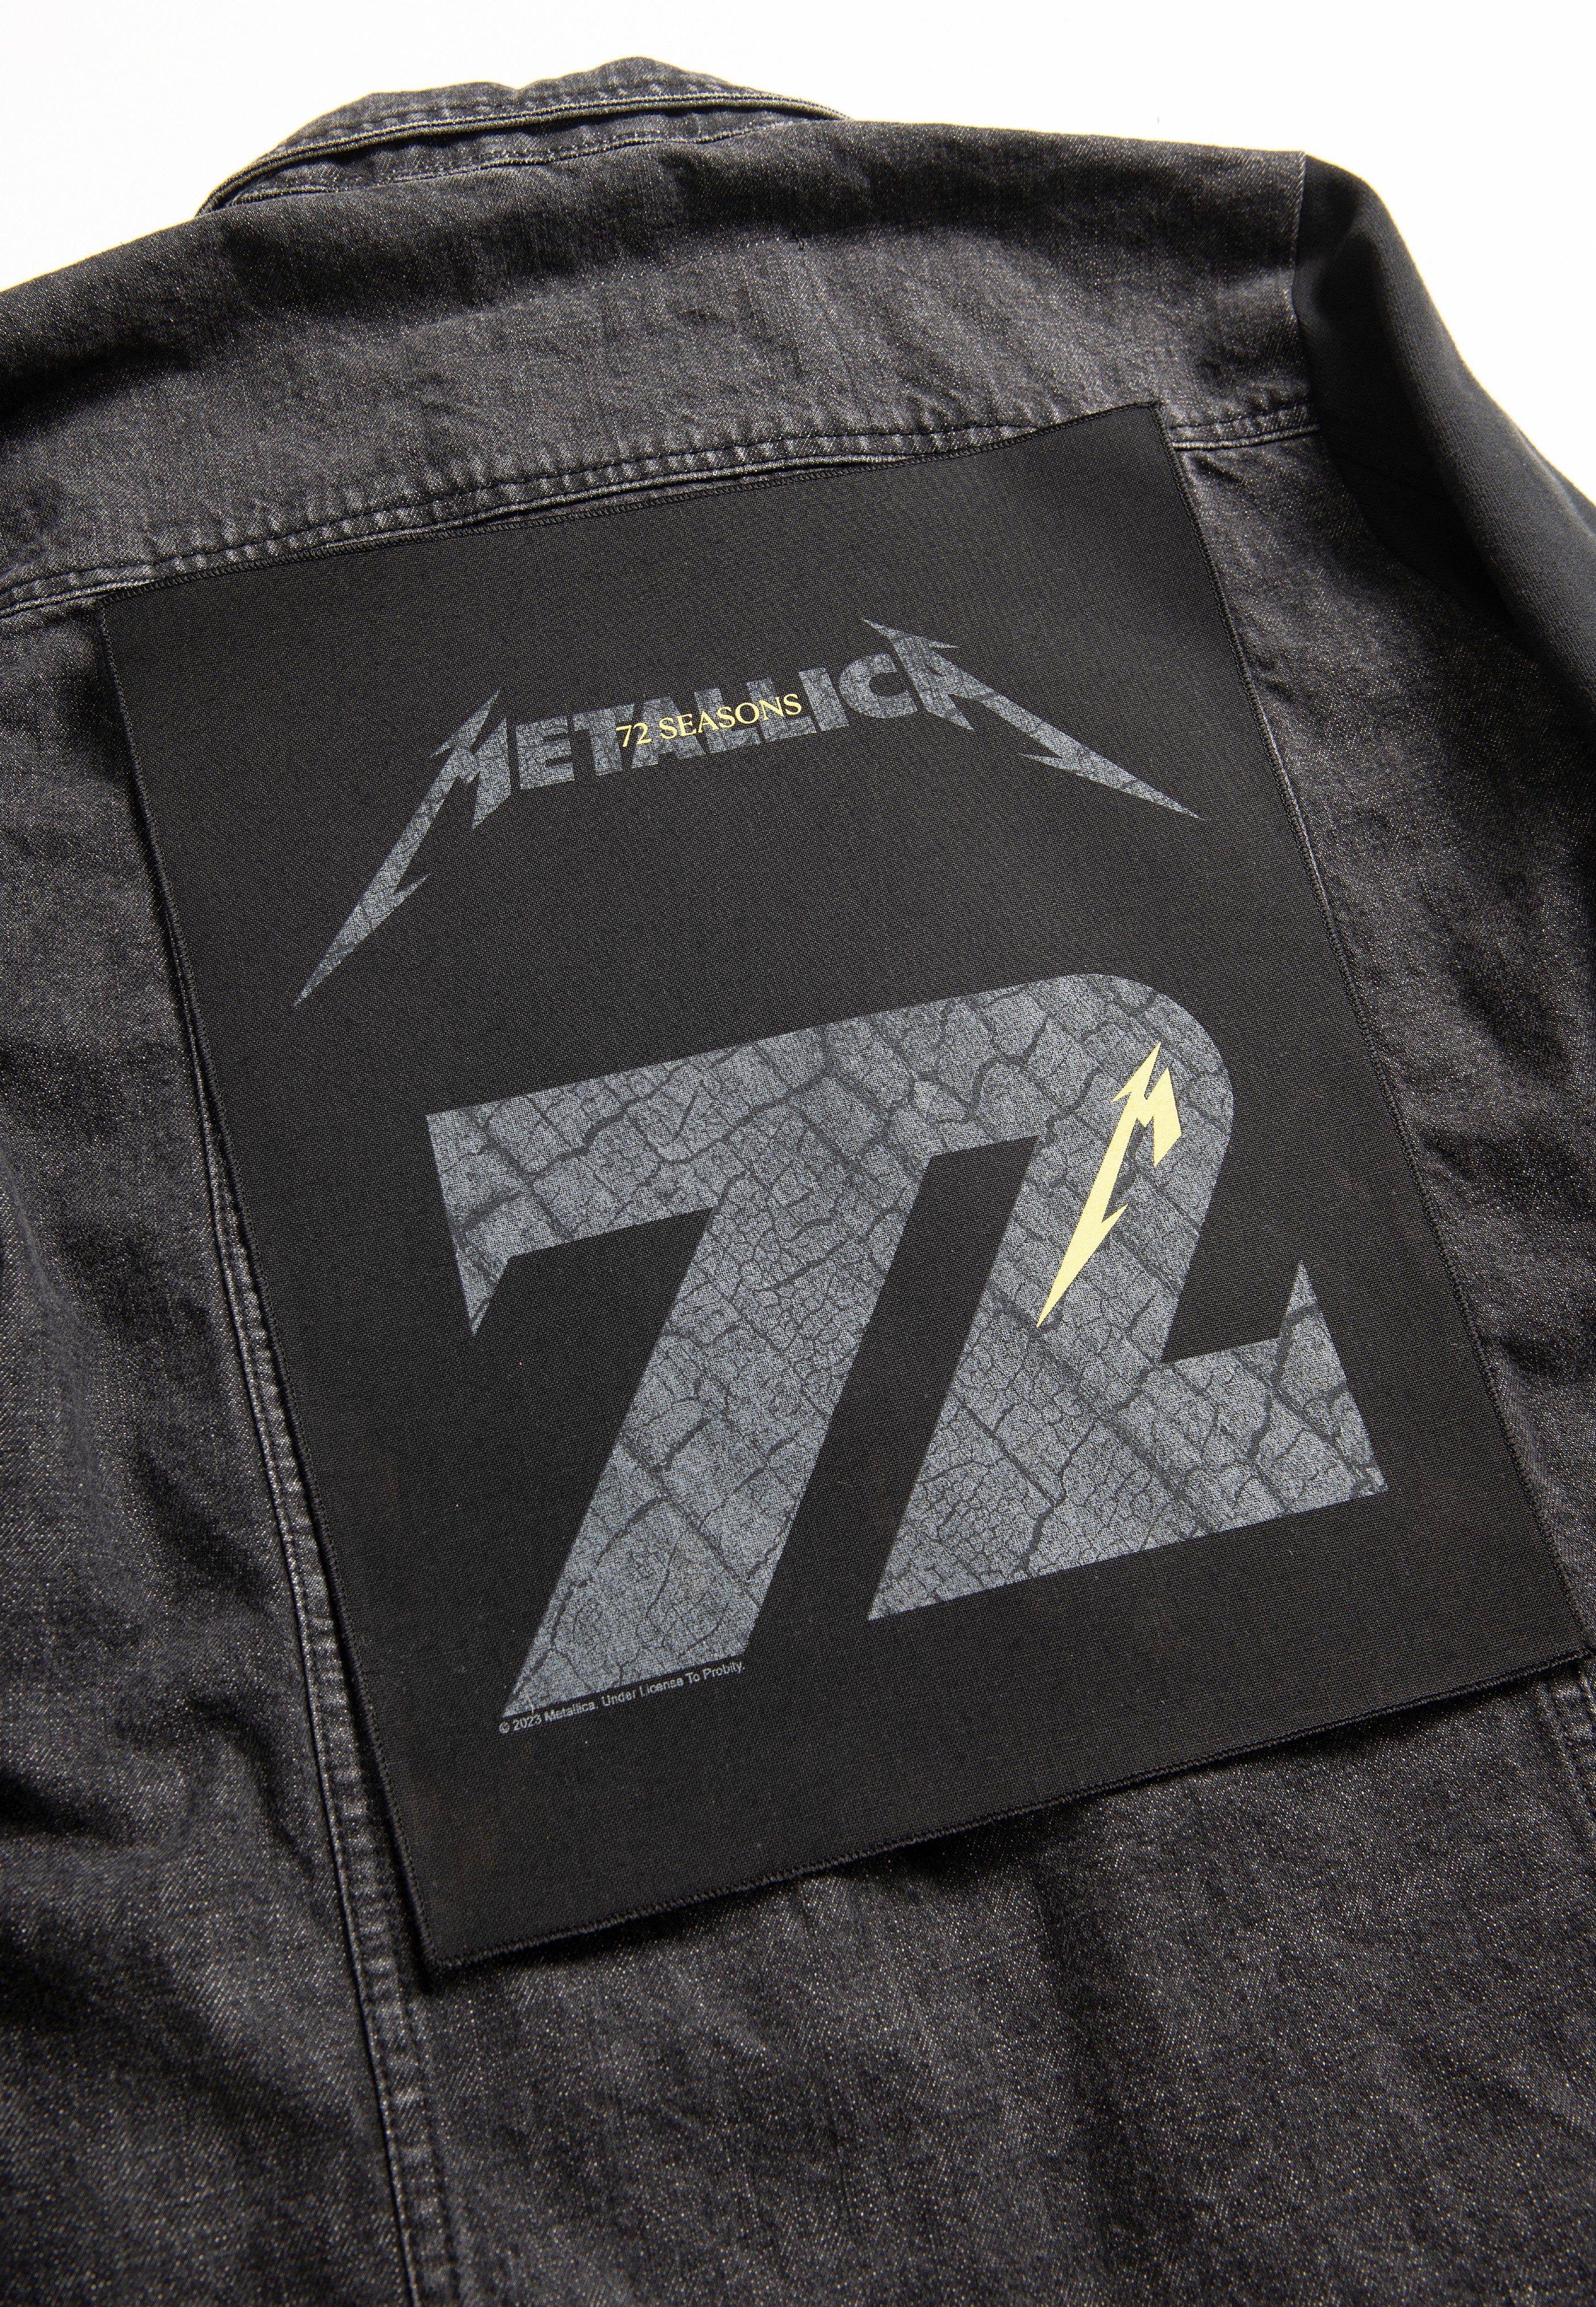 Metallica - Charred M72 - Backpatch